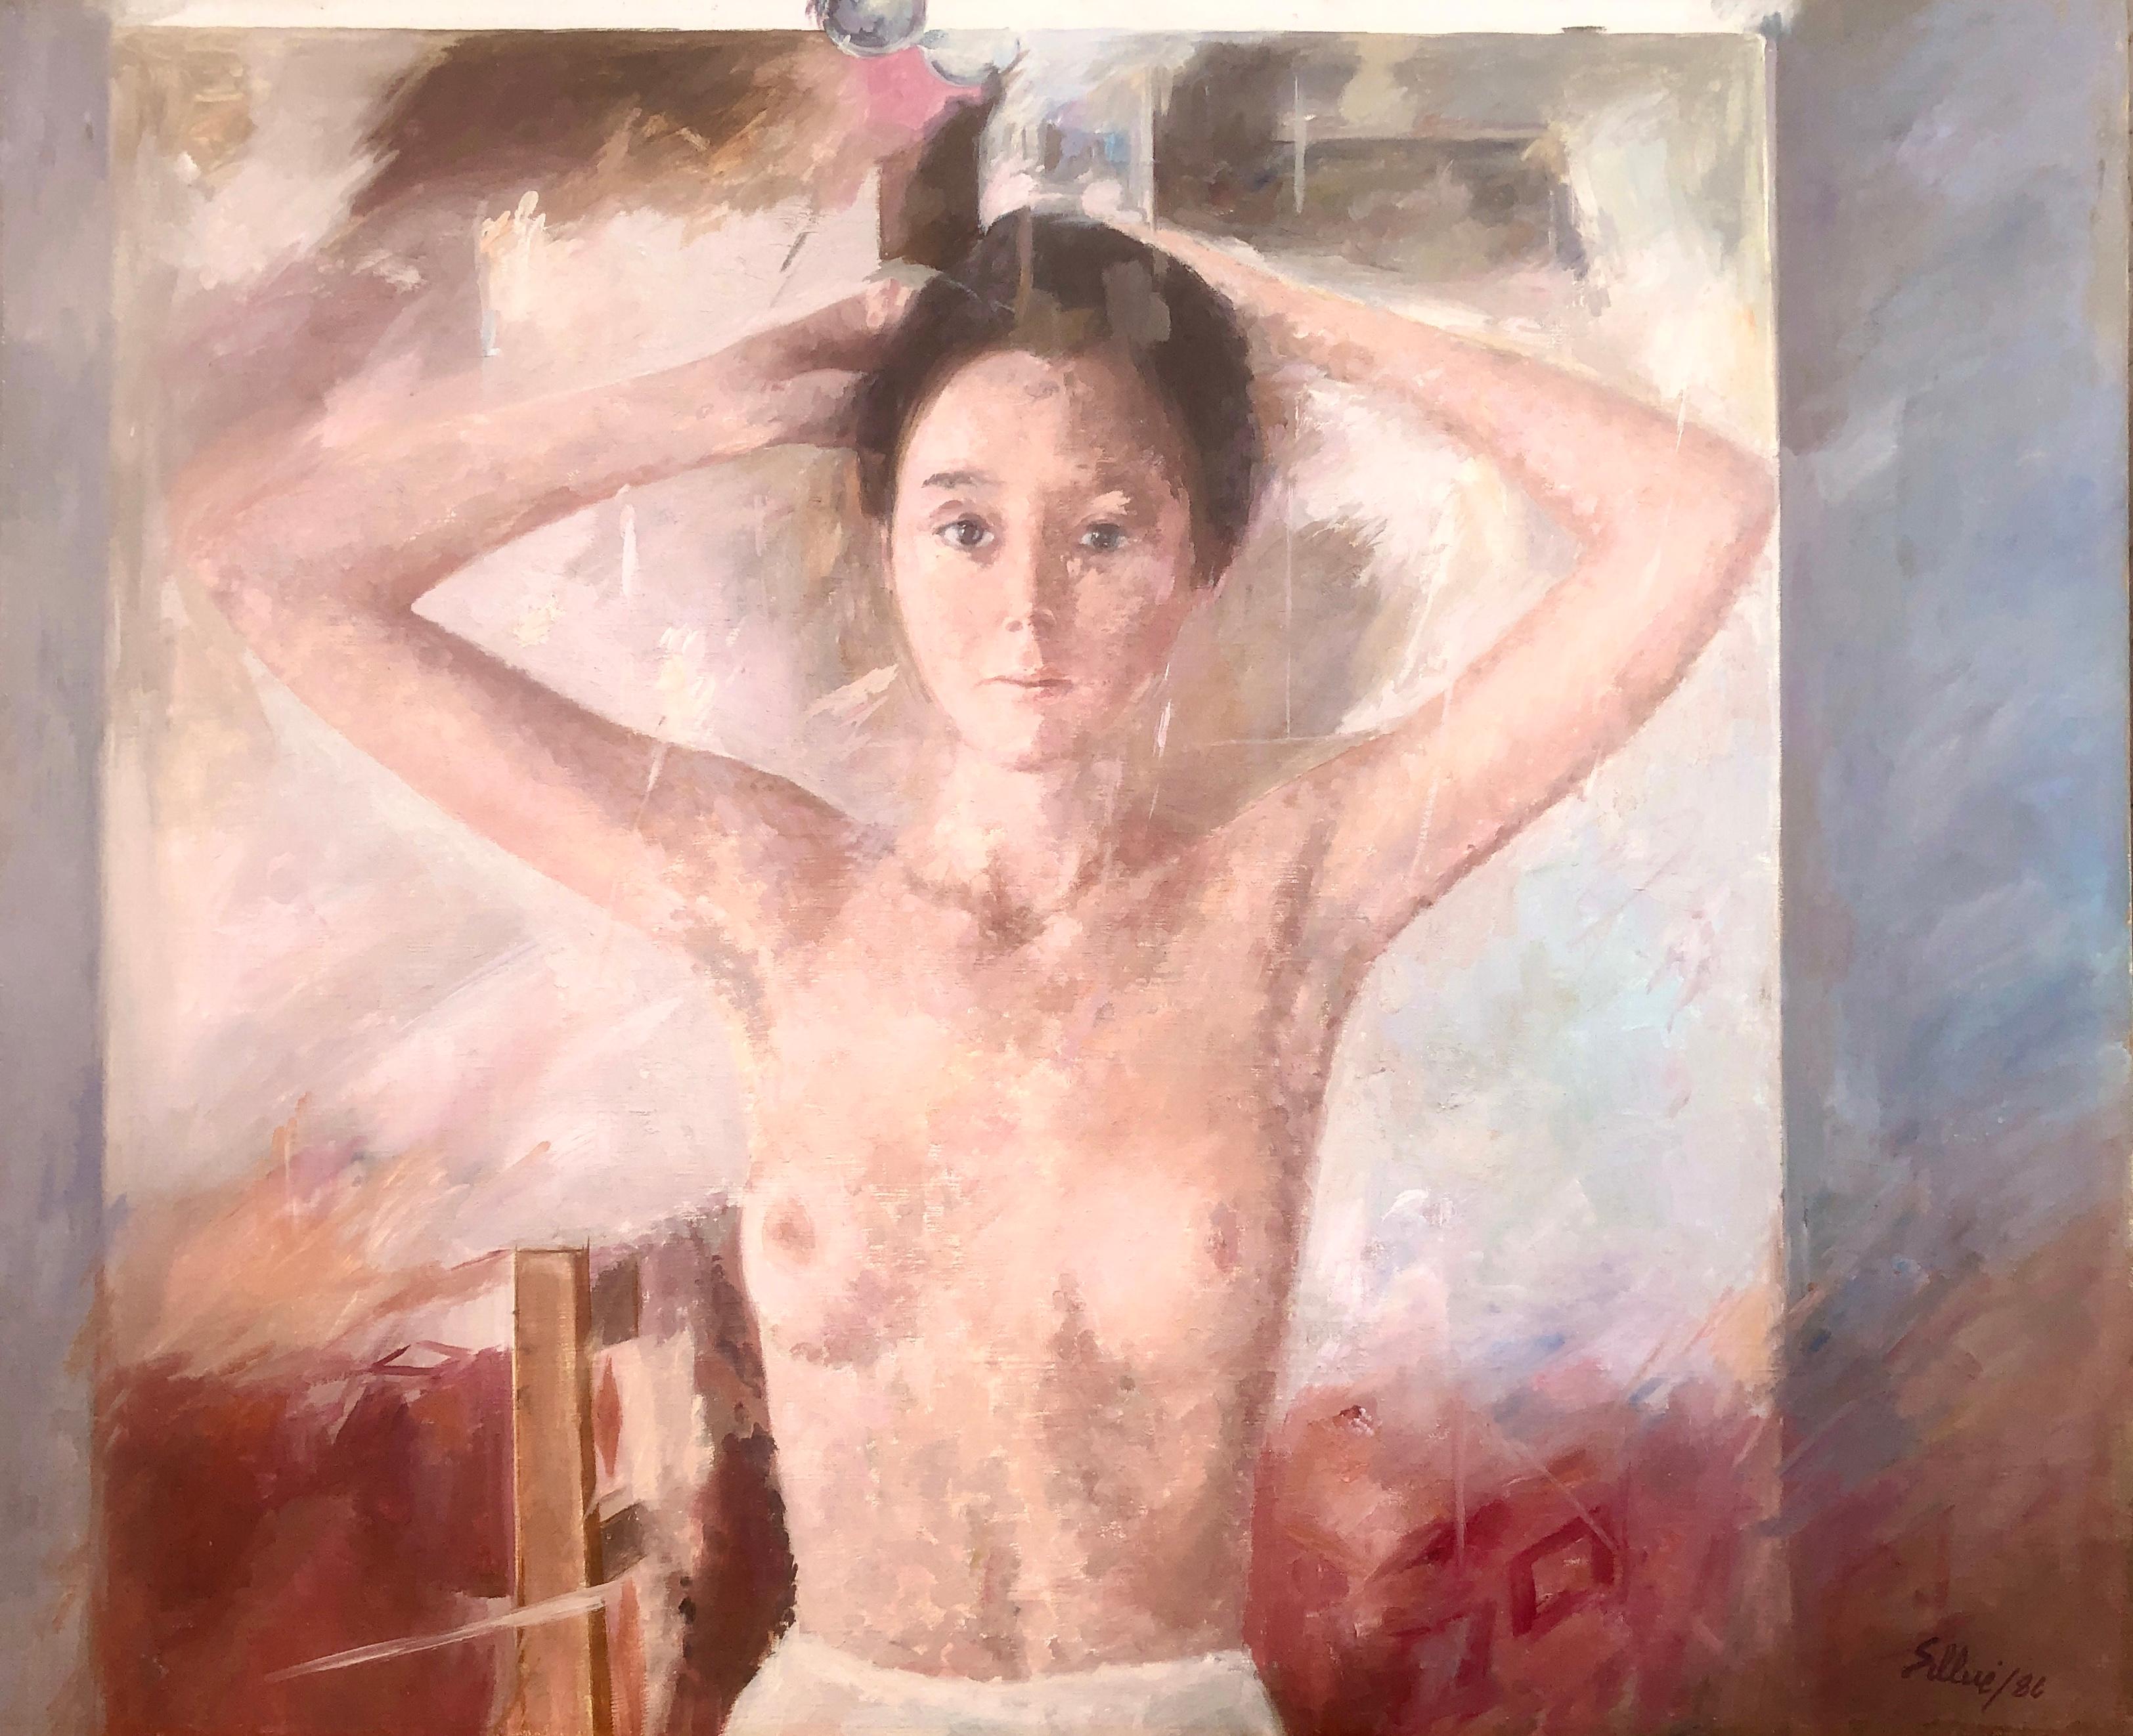 Francisco Sillué Nude Painting – Through the looking Glass Öl auf Leinwand Gemälde einer nackten Frau